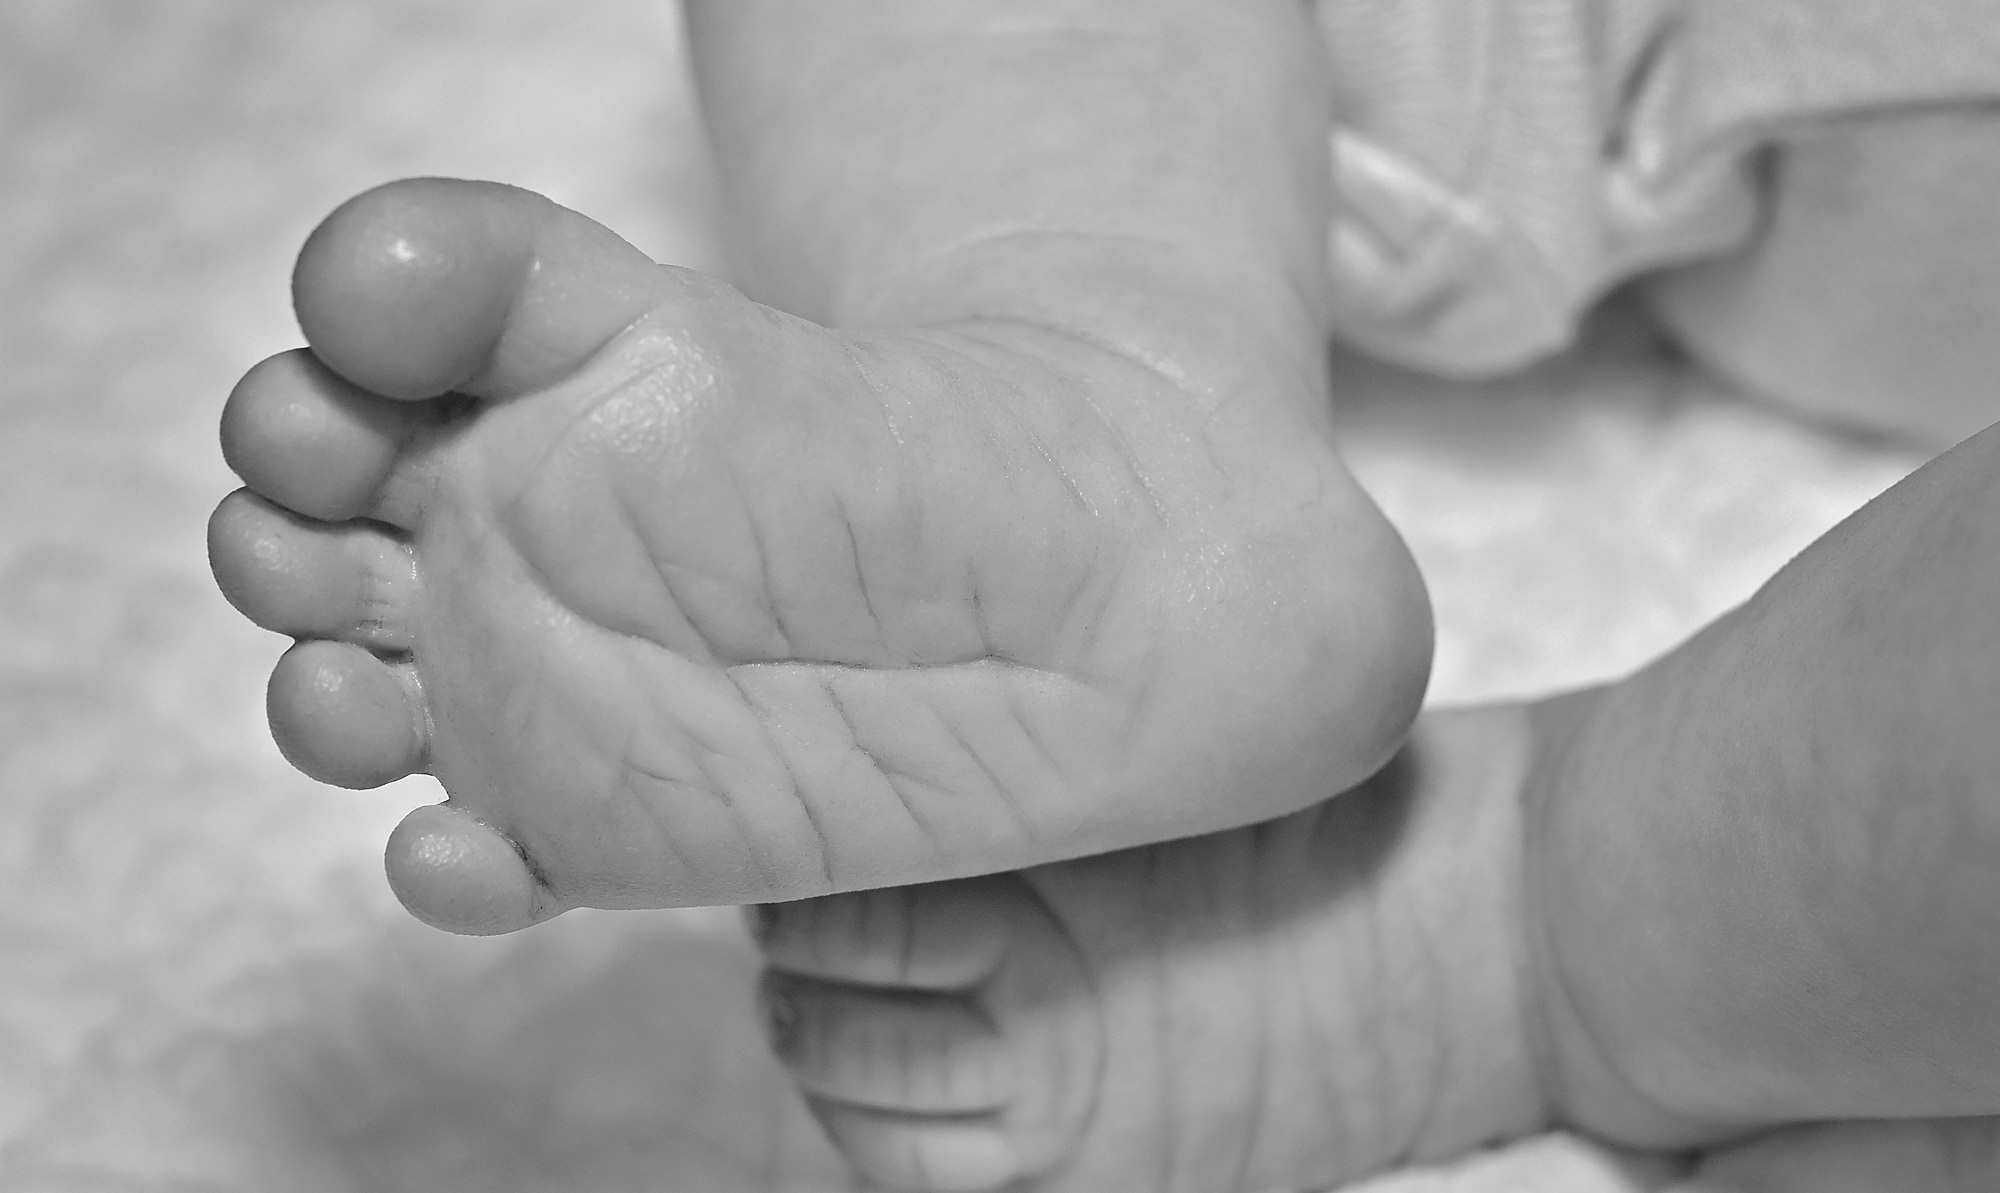 Feet, Newborn, Baby Feet, Baby, Small, human body part, human hand